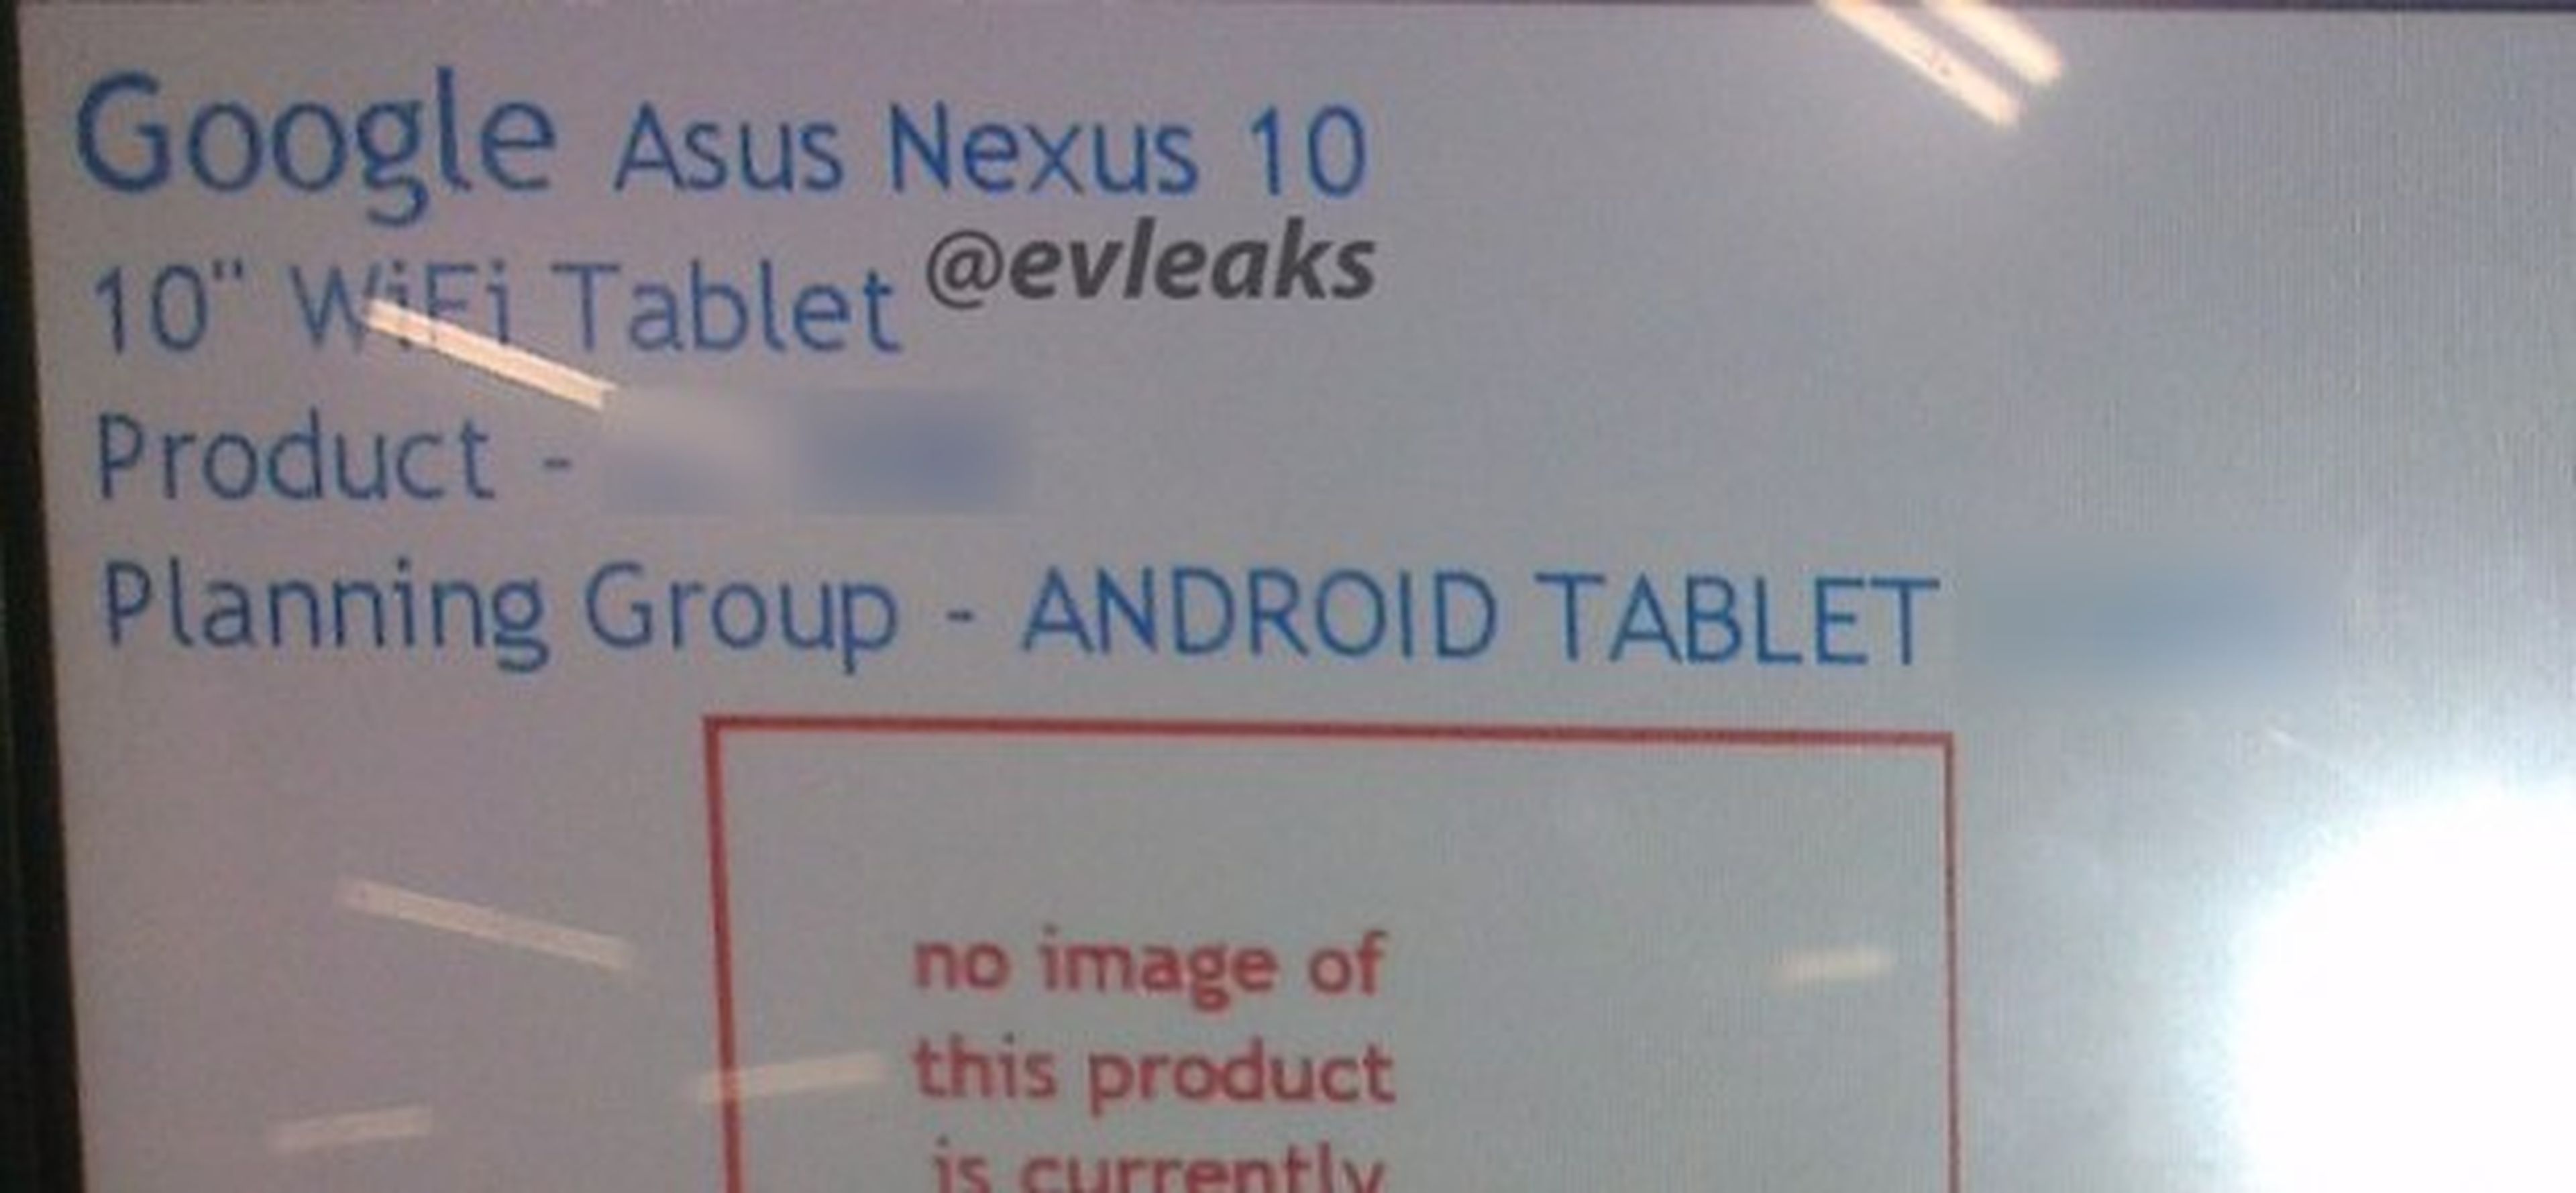 Google Asus Nexus 10